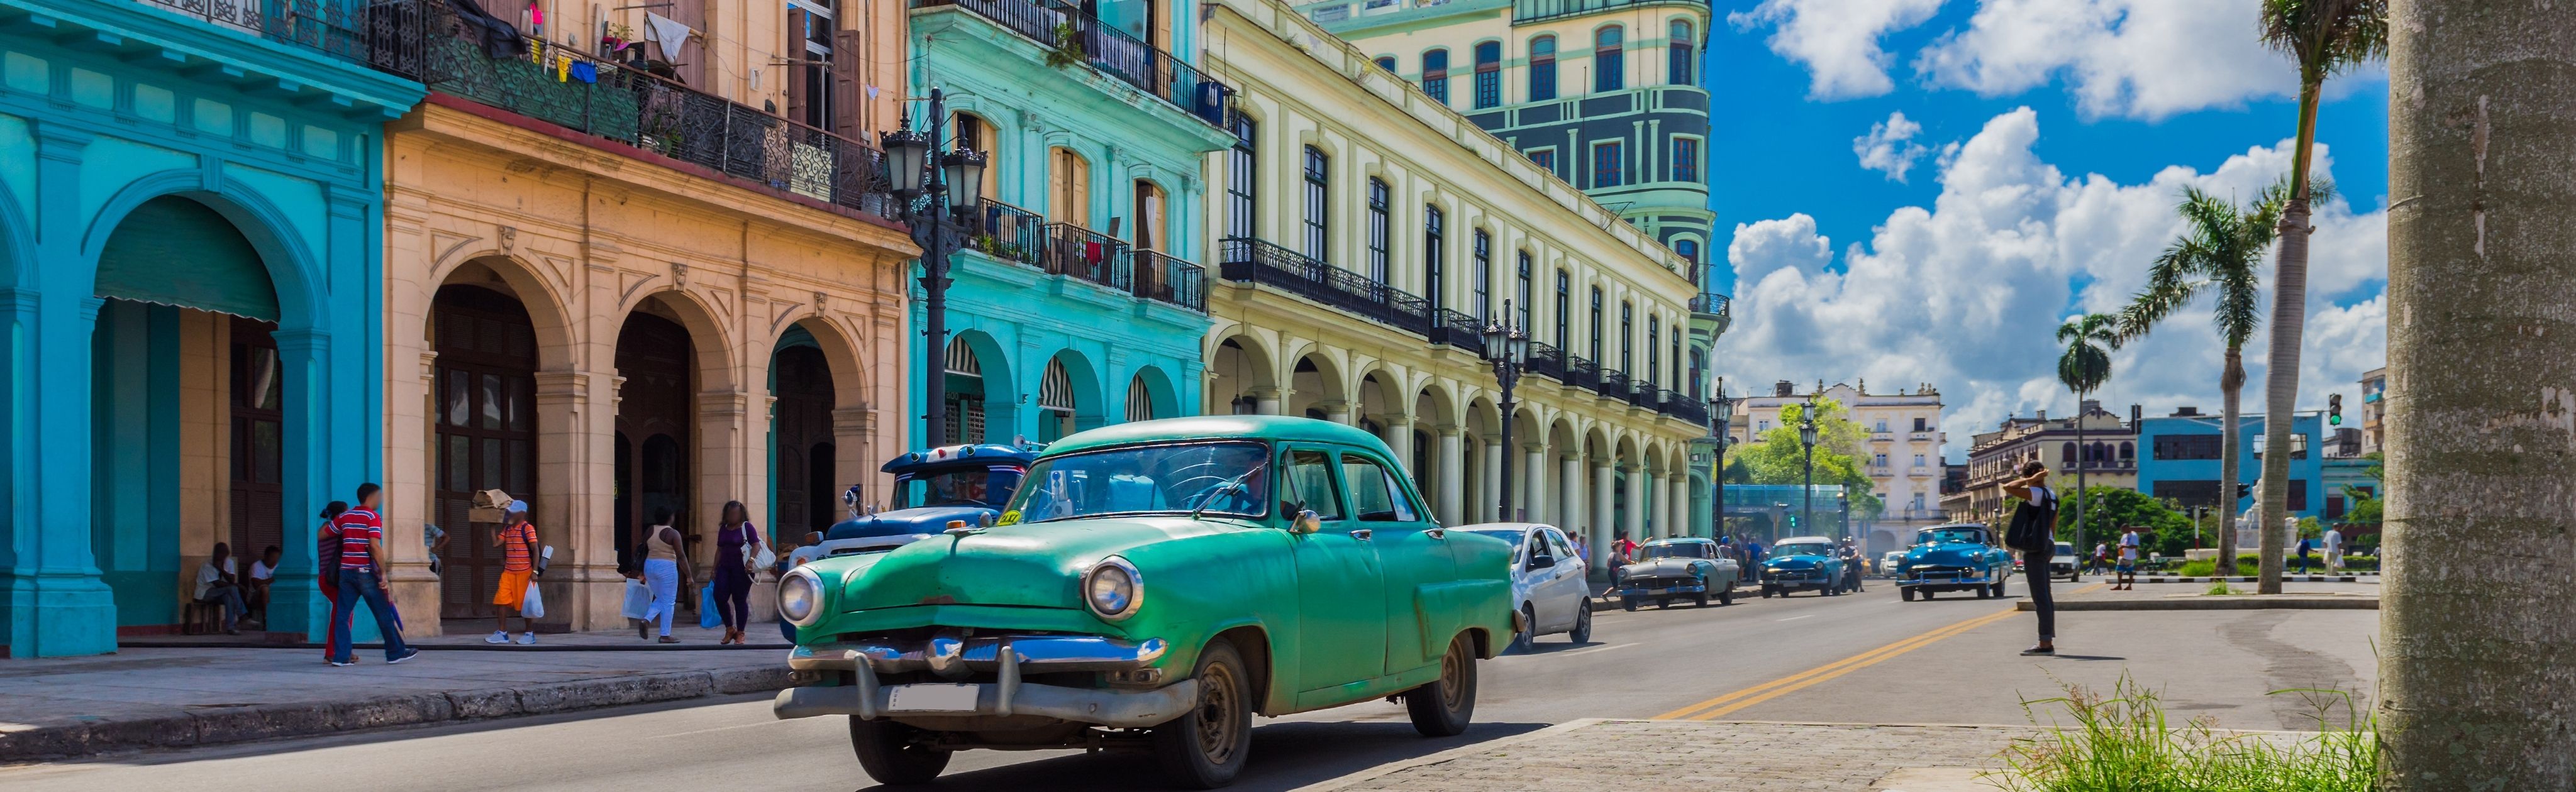 Which famous Cuban dance originated in Havana?